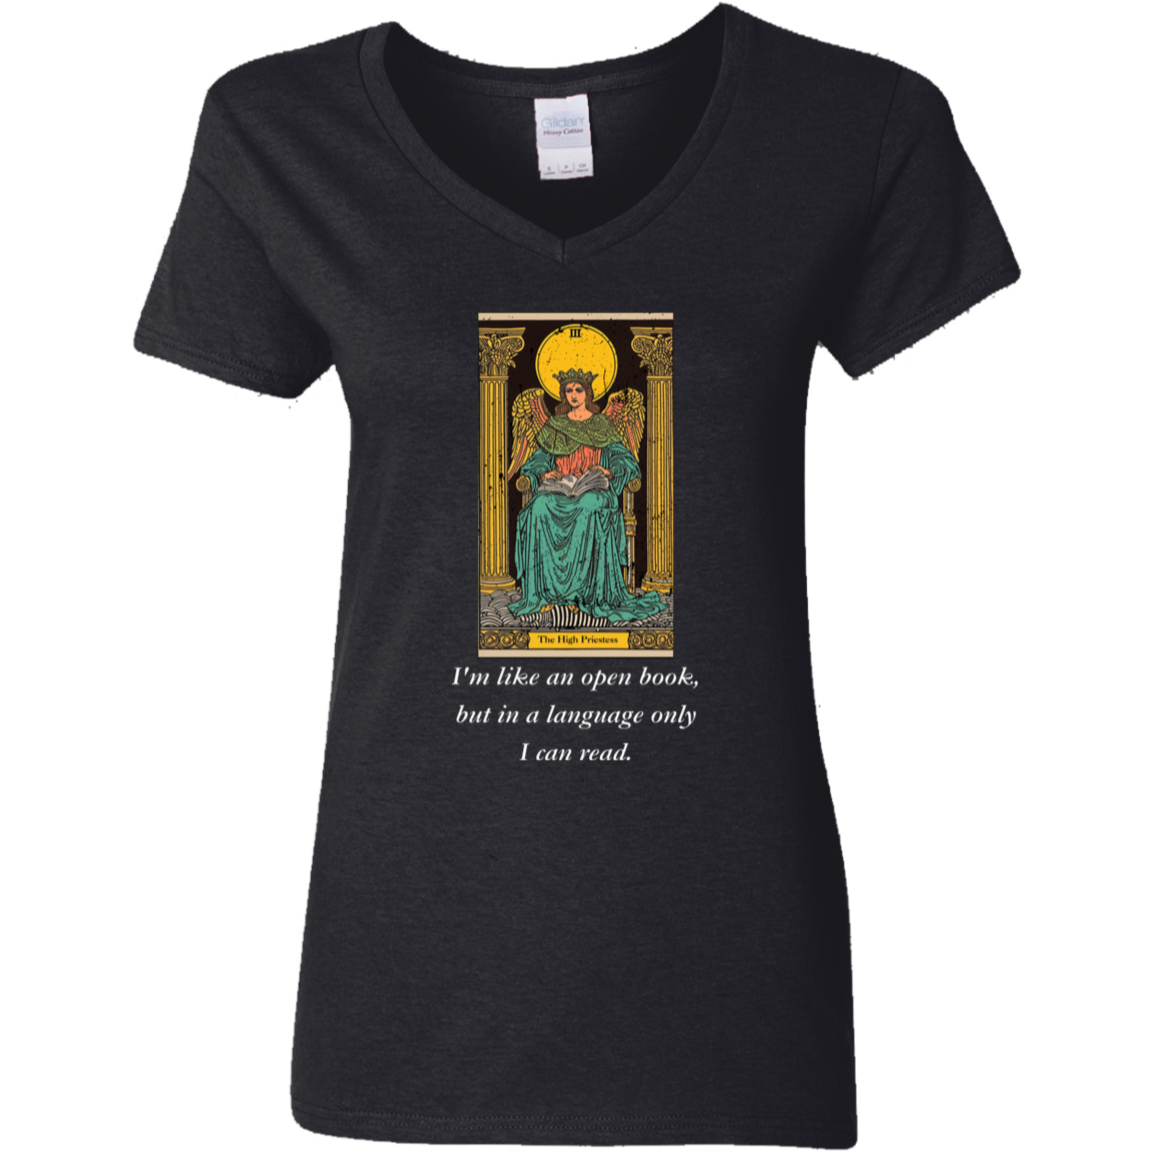 Funny the high priestess women's black tarot card T shirt from BLK Moon Shop